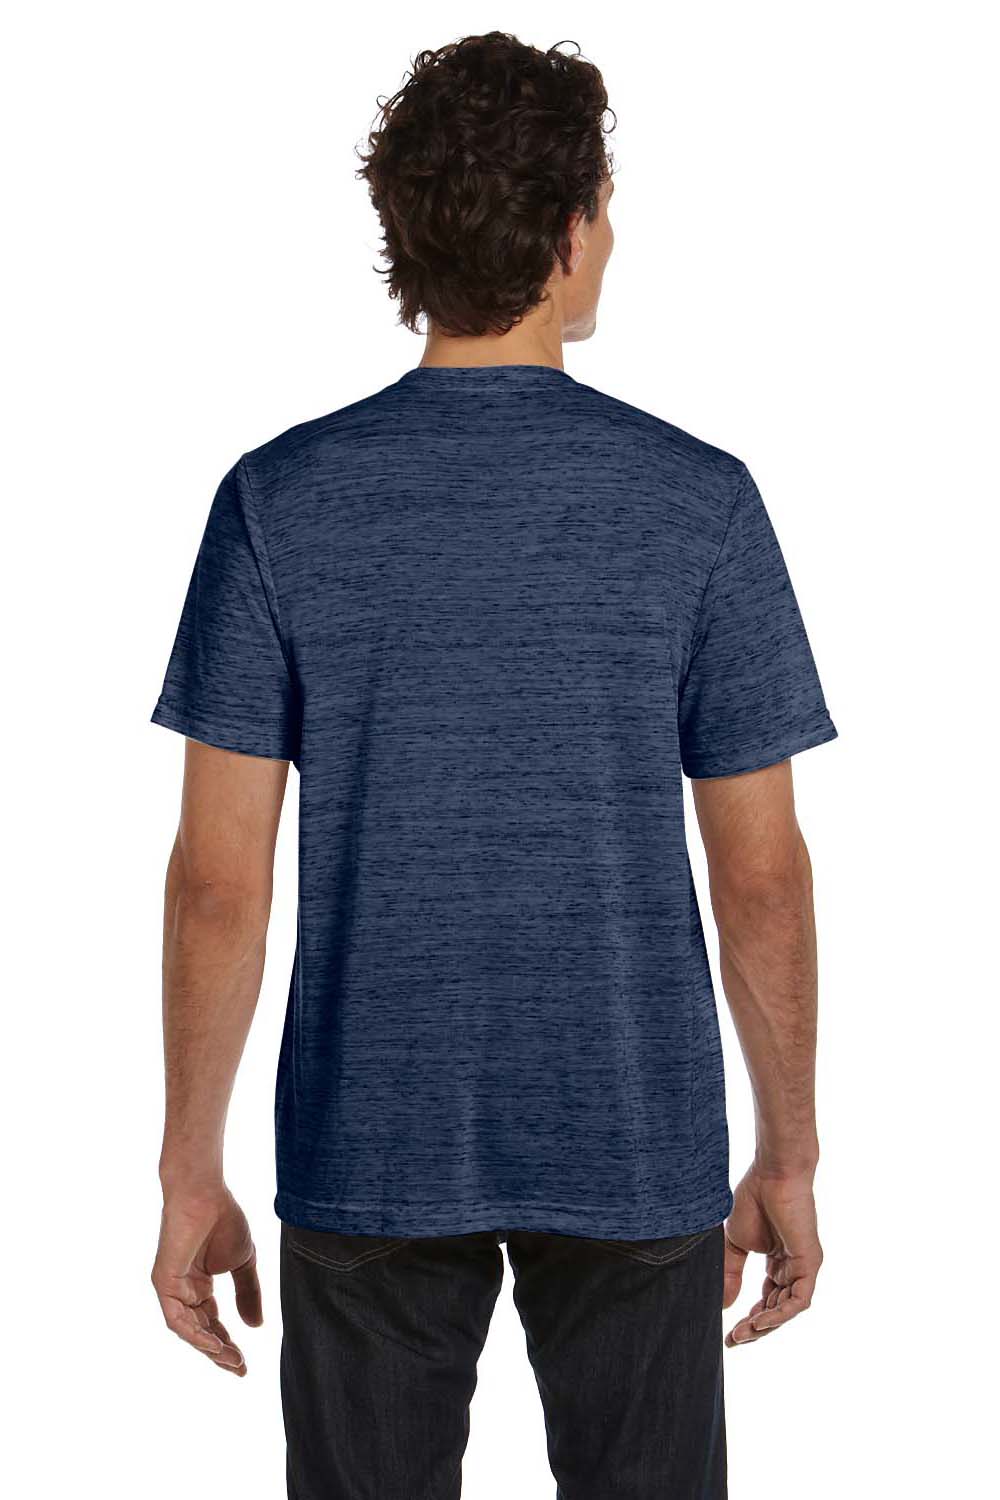 Bella + Canvas 3650 Mens Short Sleeve Crewneck T-Shirt Navy Blue Marble Back